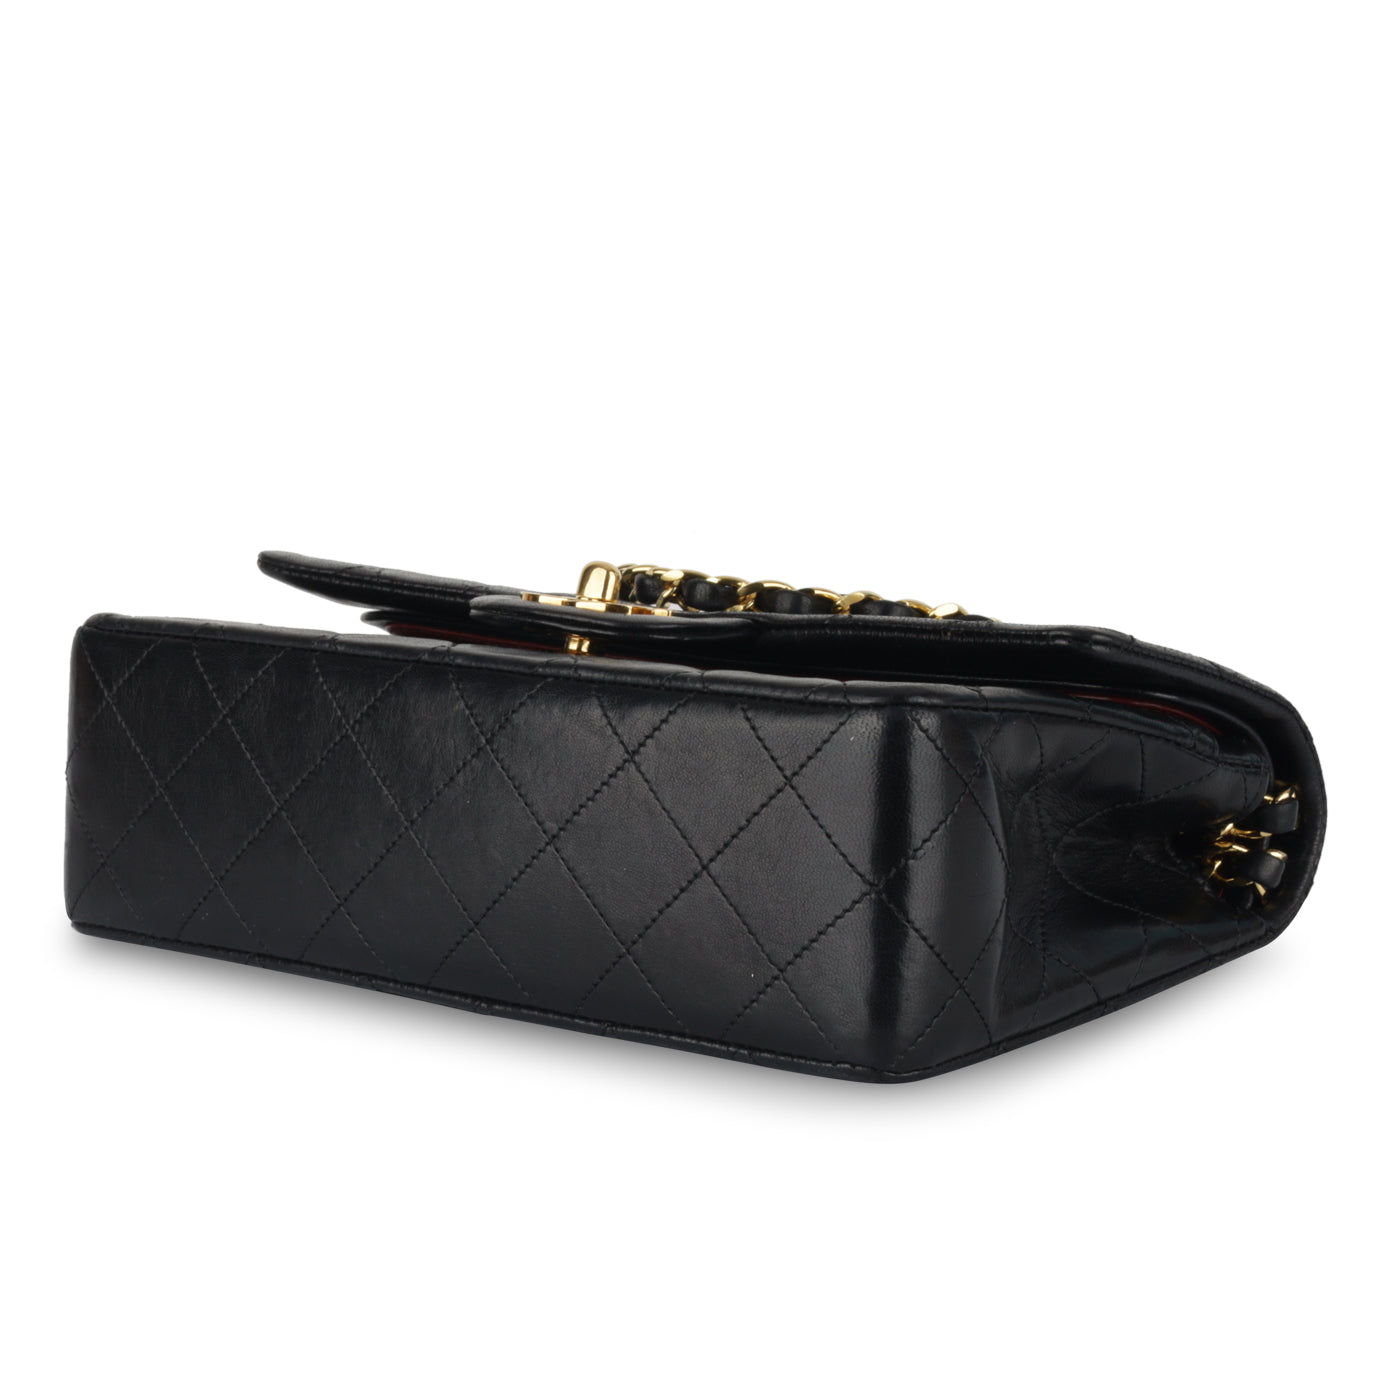 Chanel - Classic Flap Bag - Small - Black Lambskin - GHW - Pre